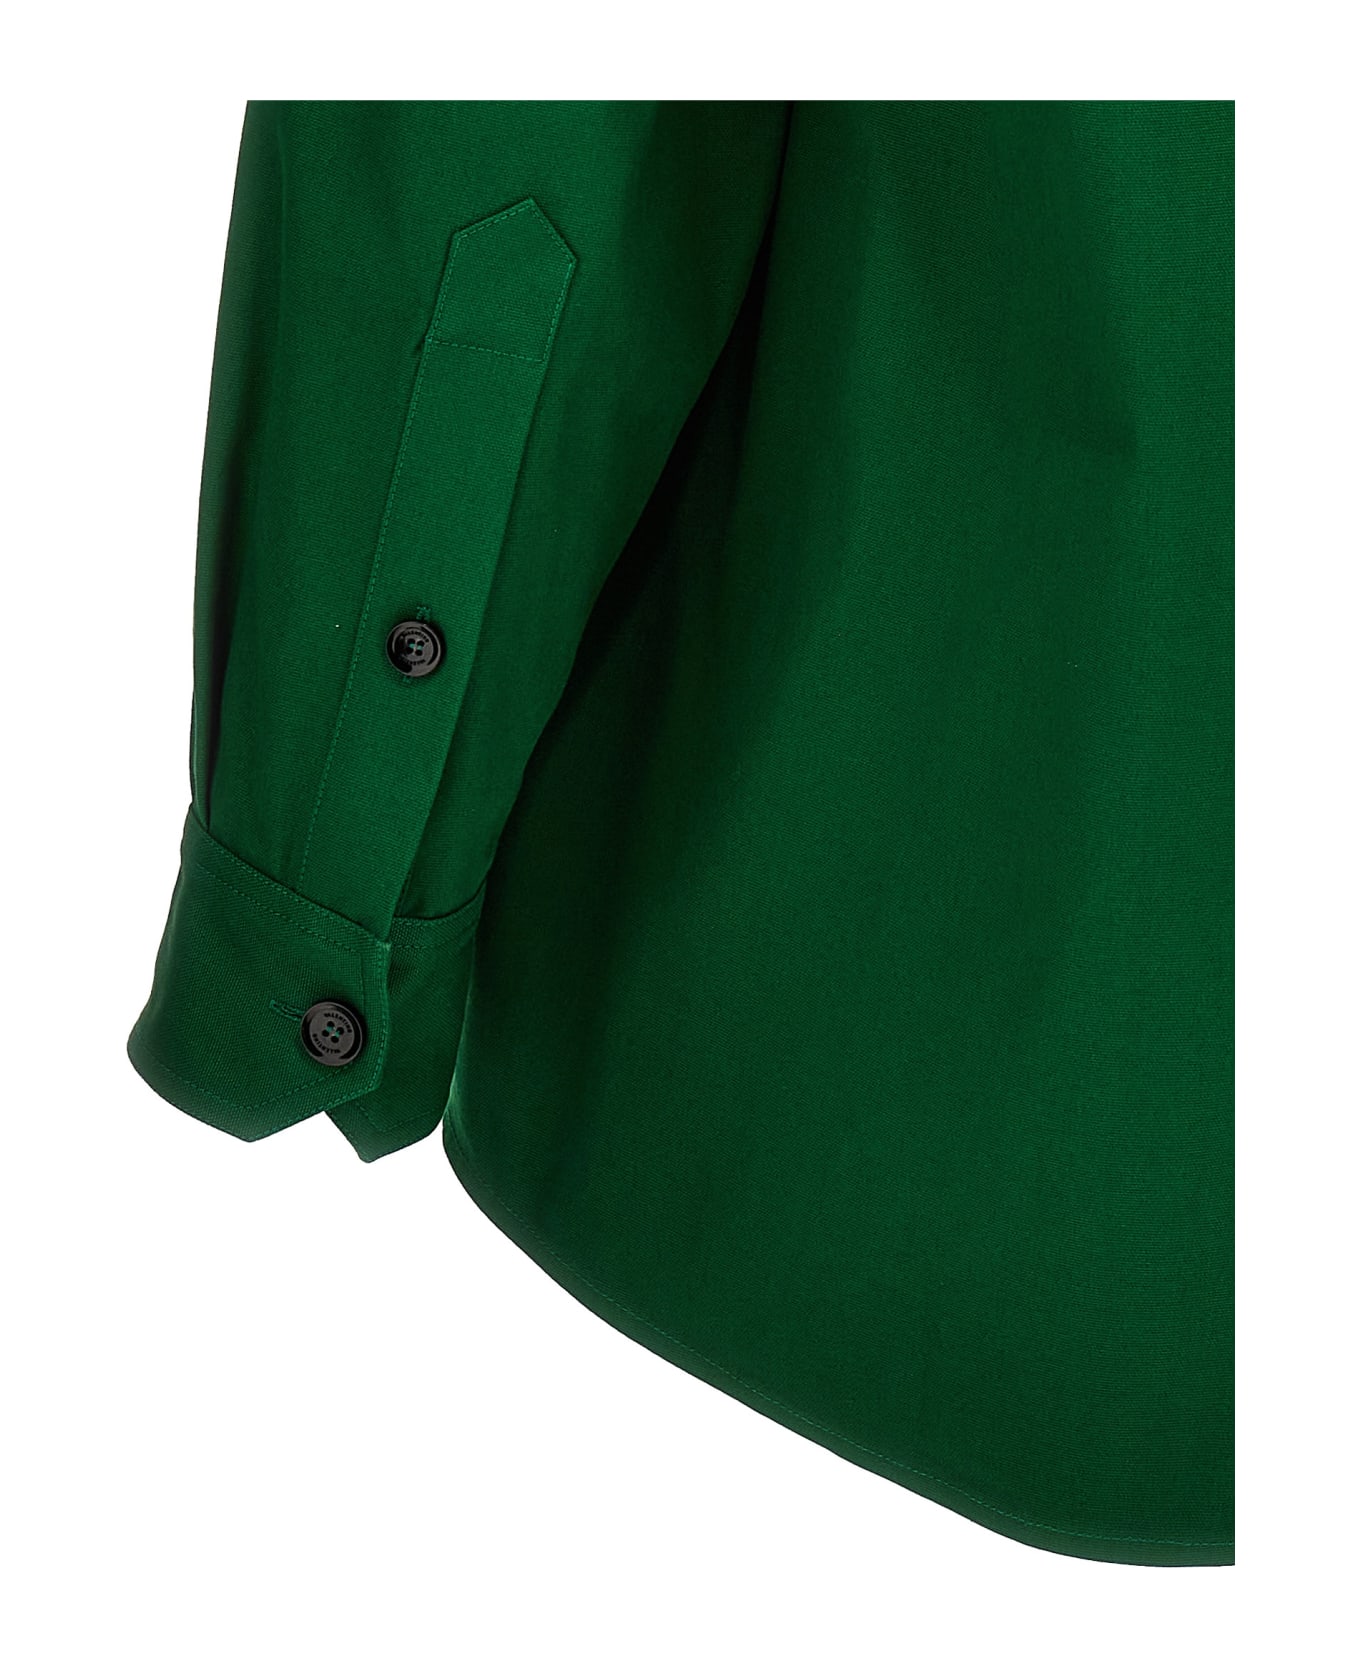 Valentino Garavani Canvas Shirt Jacket - Green